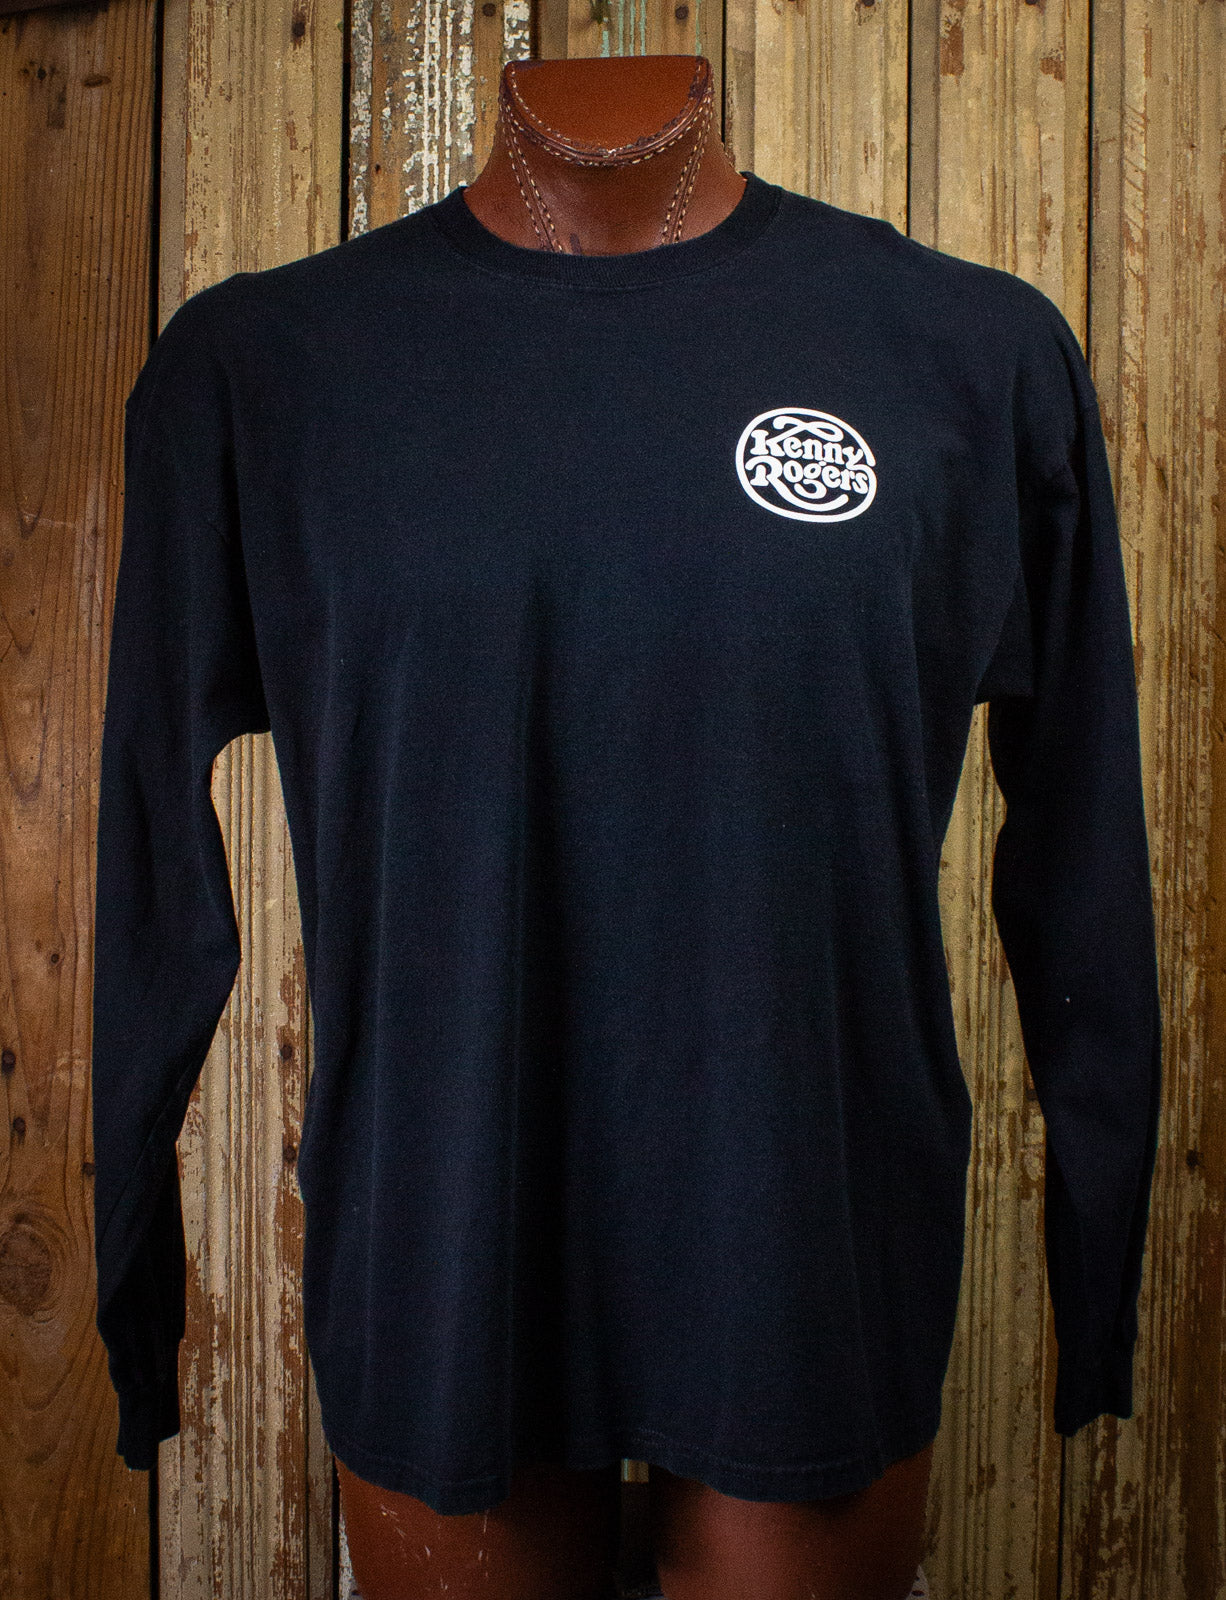 Vintage Kenny Rogers Metter Racing Concert T Shirt 90s Black XL